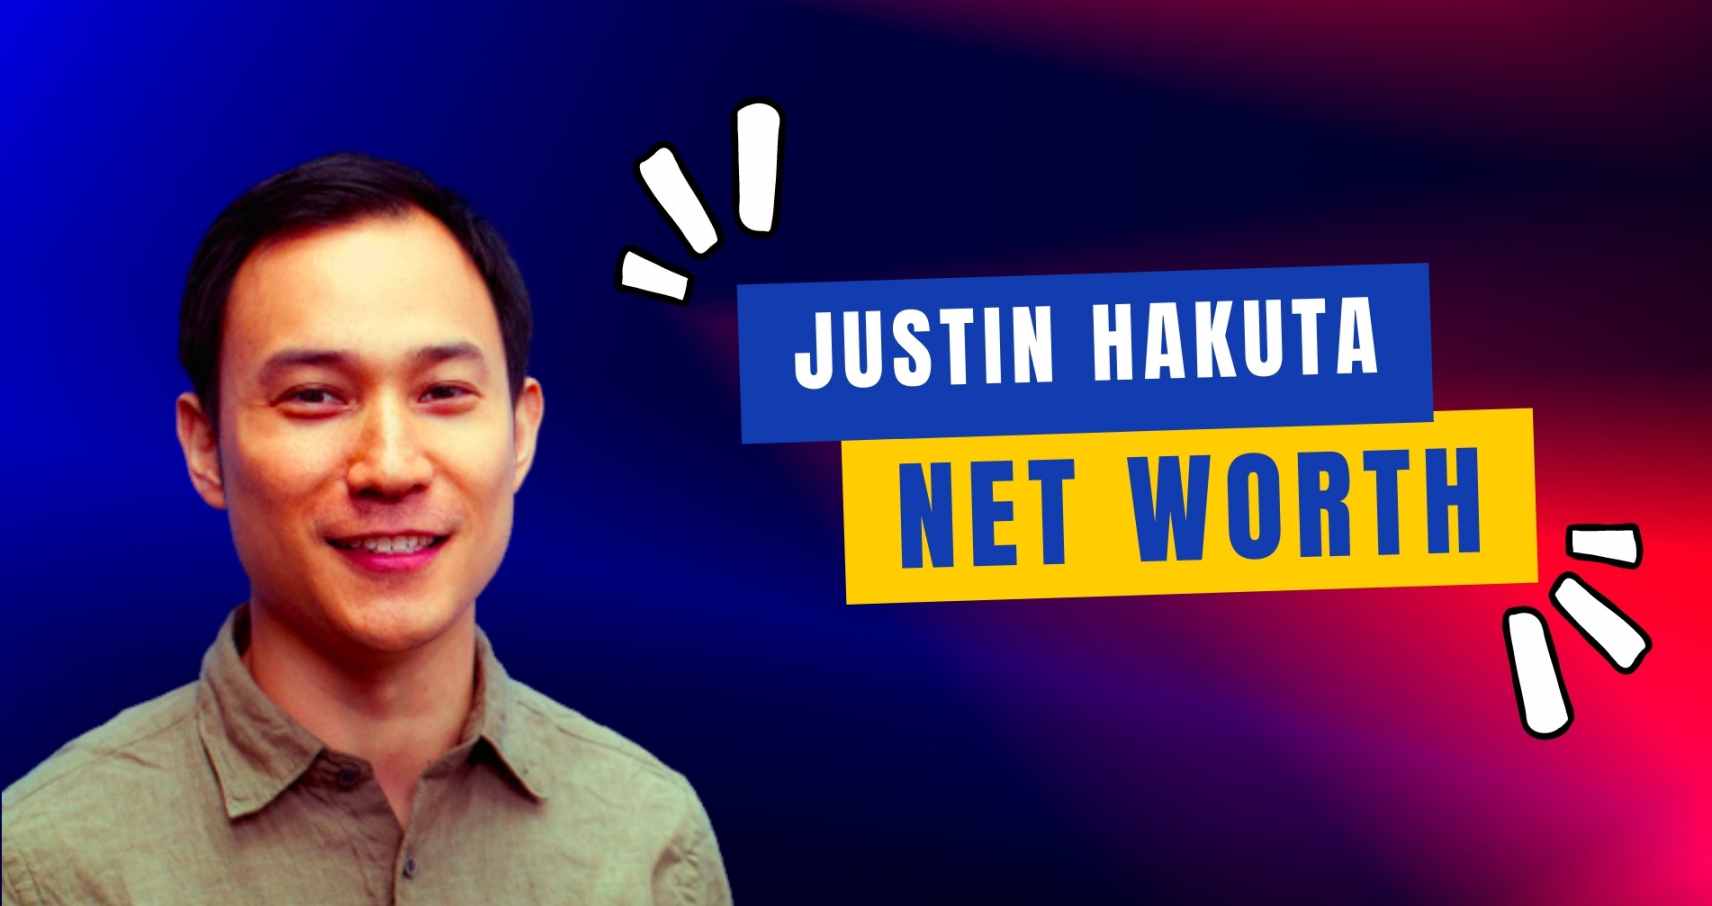 Justin Hakuta Net Worth information